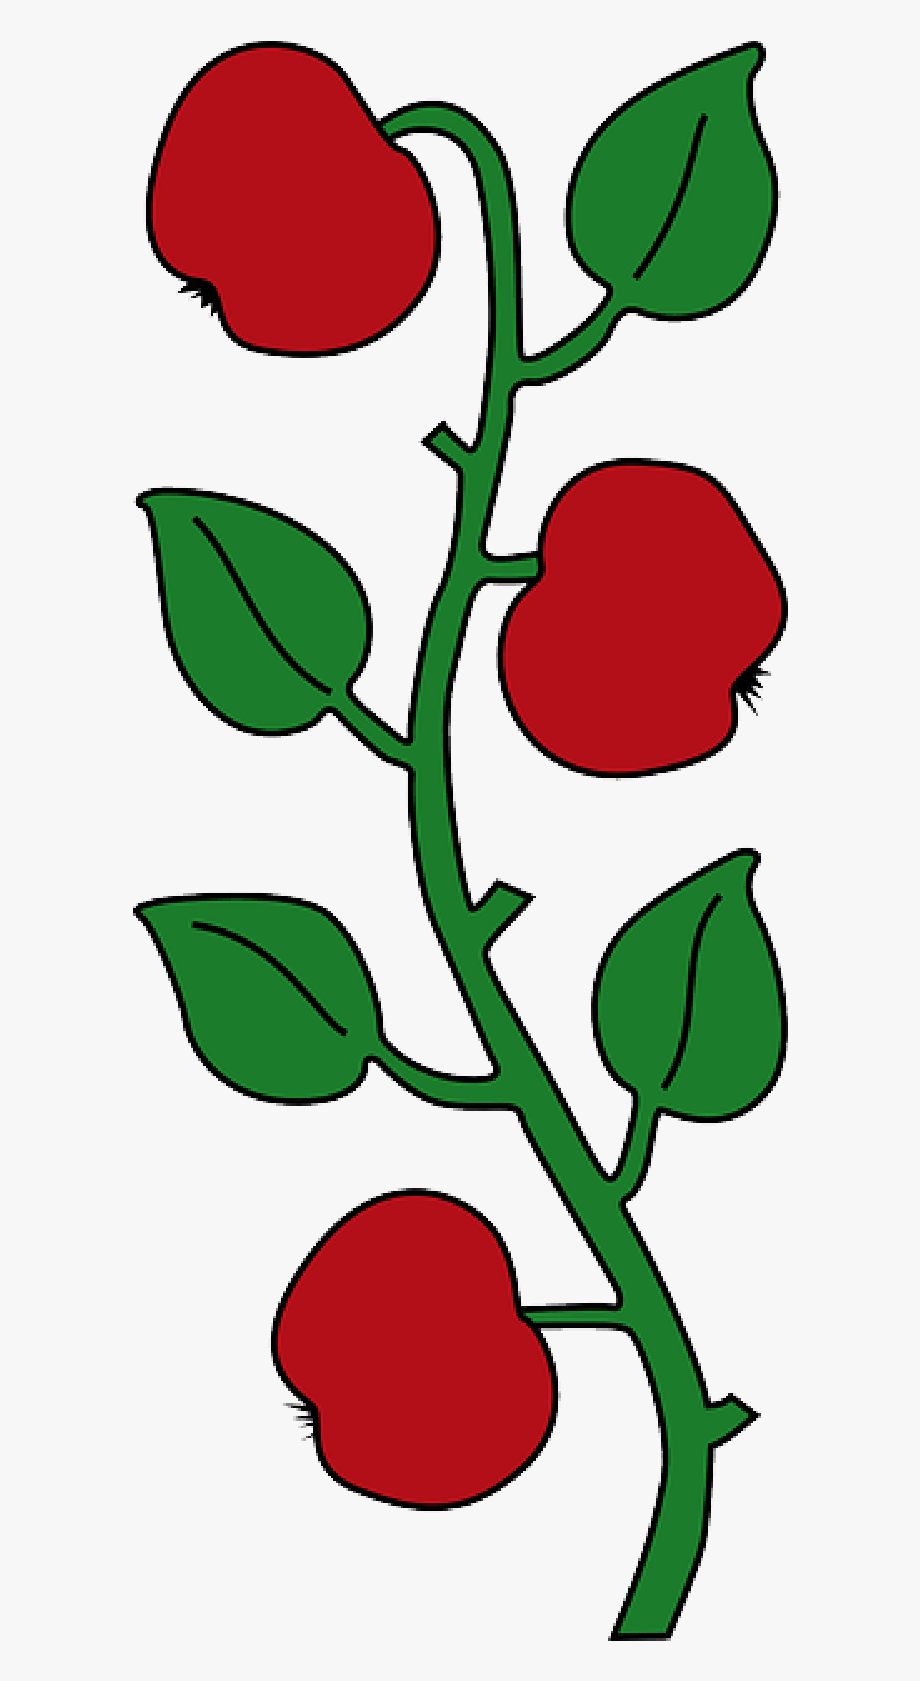 Fruit Tree Cartoon